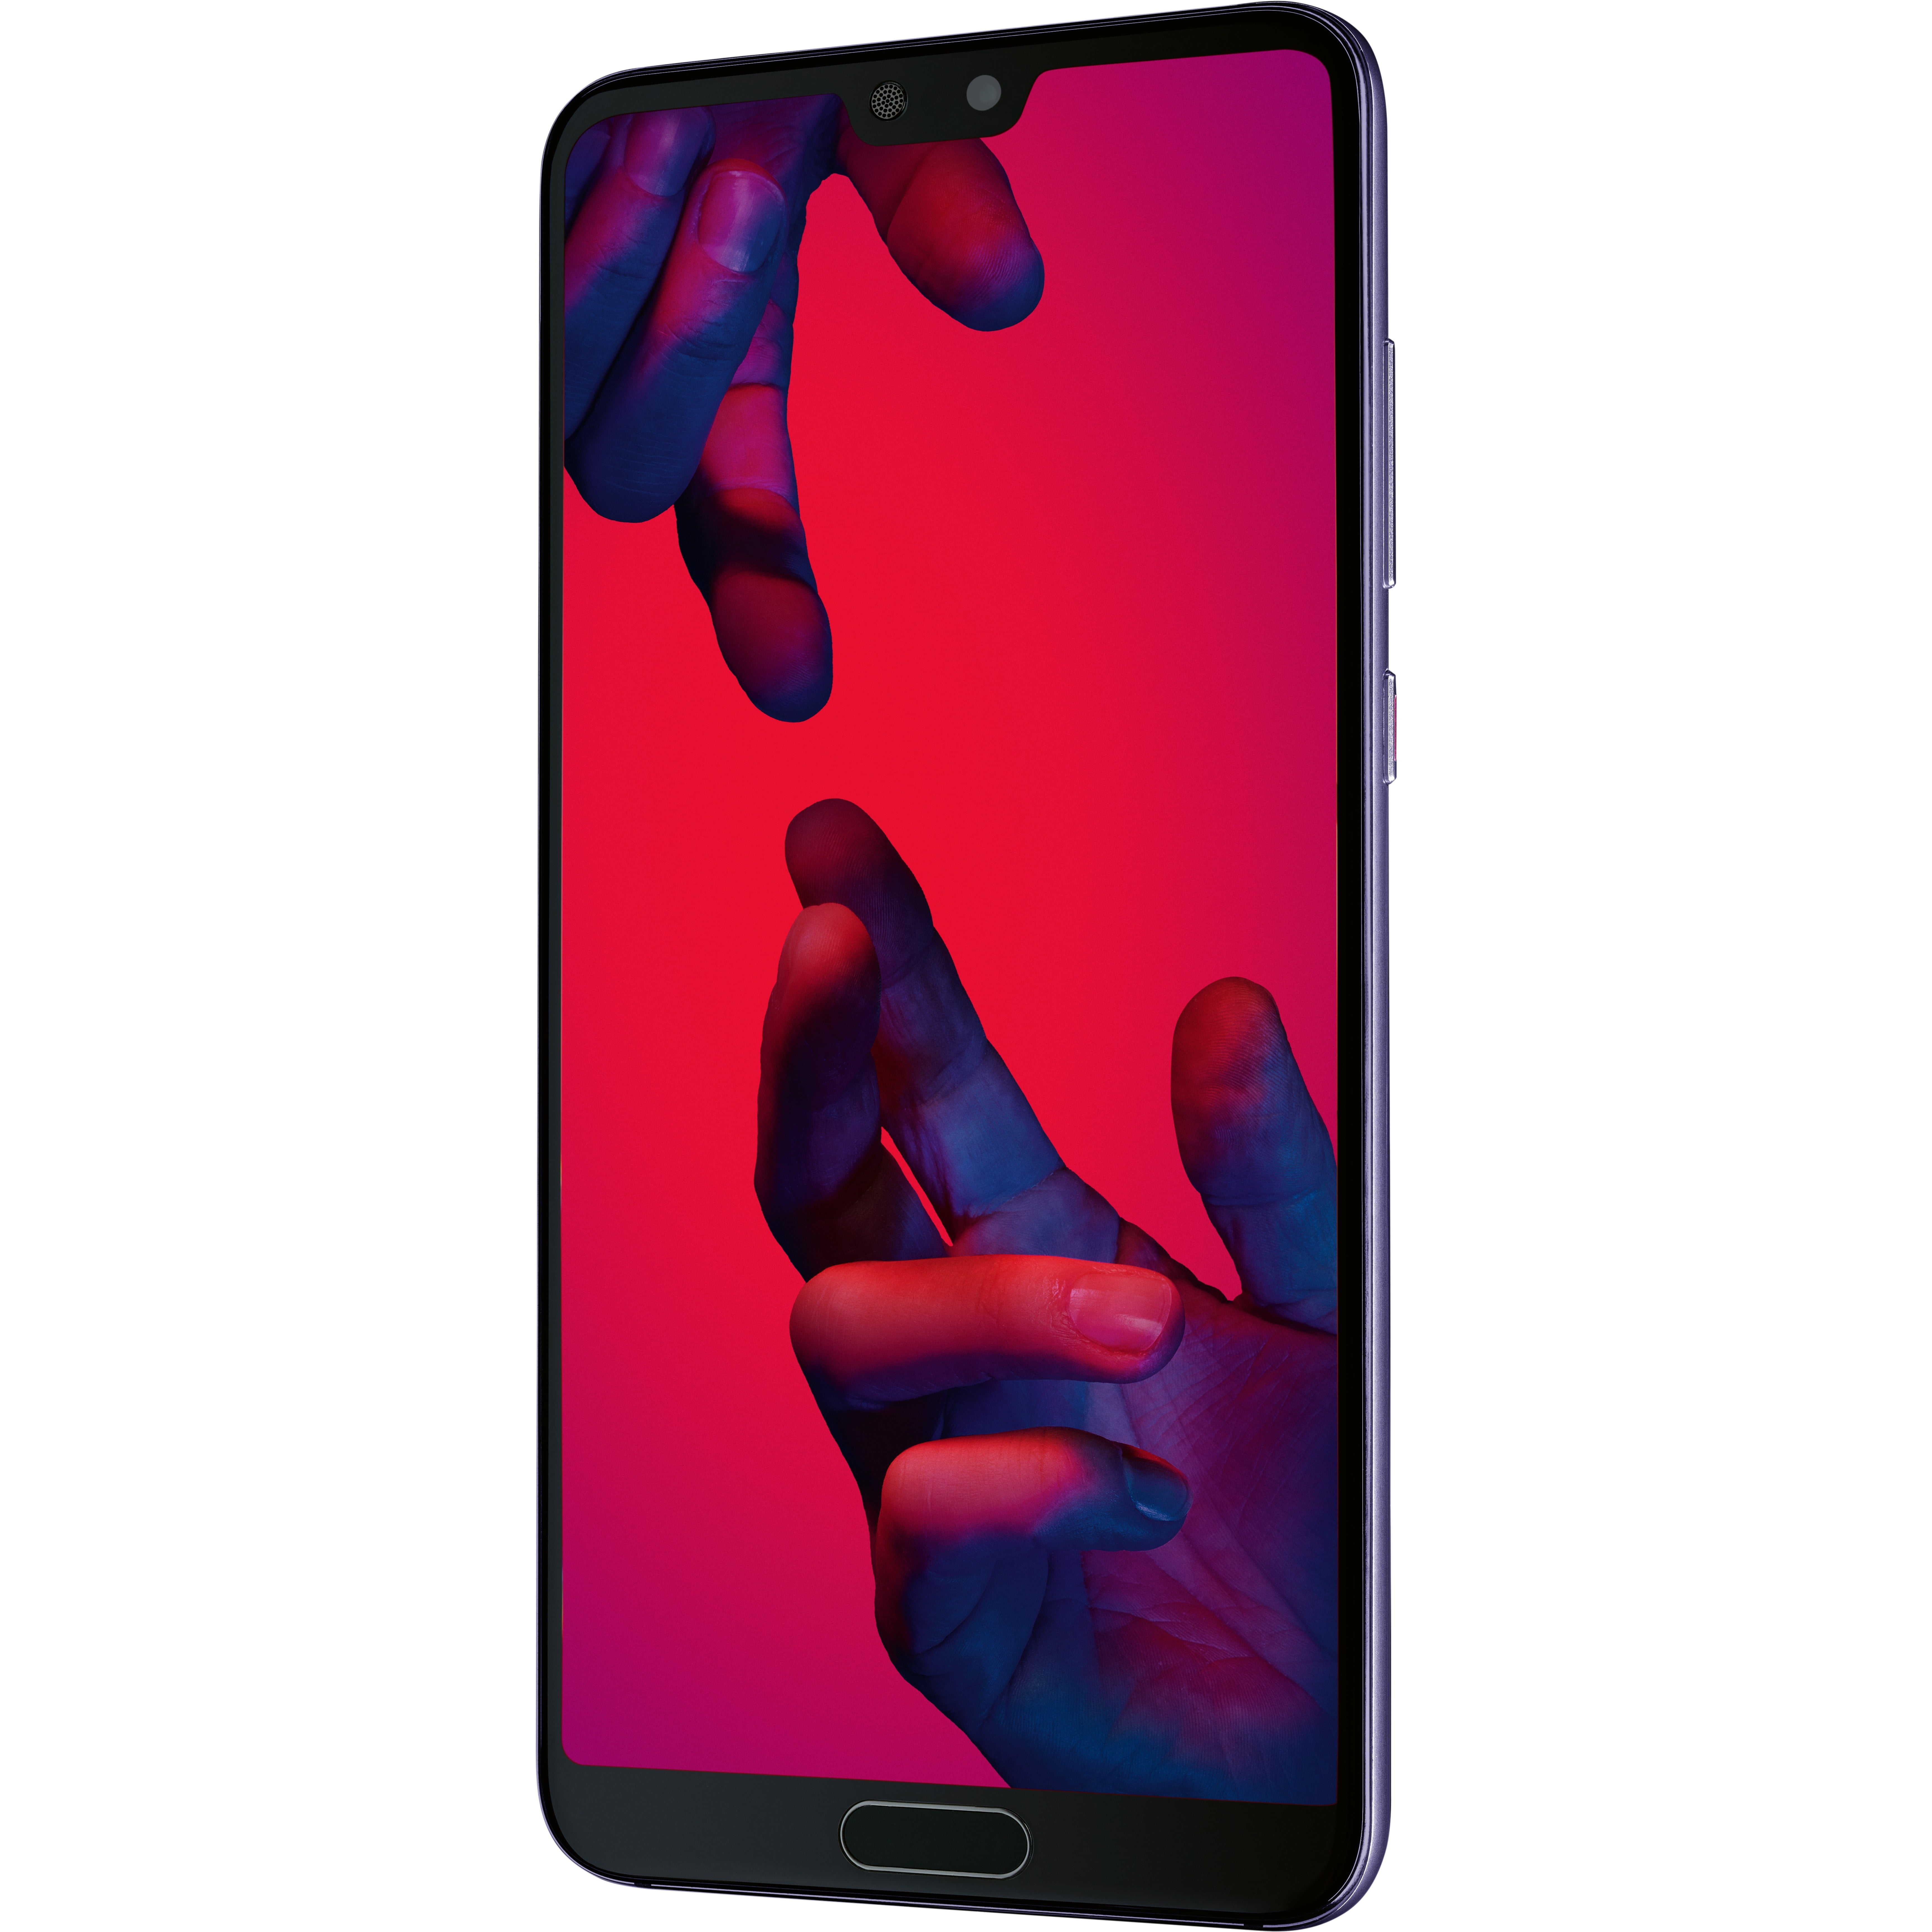 Belofte buik dood gaan Huawei P20 Pro 128 GB Smartphone, 6.1" OLED Full HD 1080 x 2280, 6 GB RAM,  Android 8.1 Oreo, 4G - Walmart.com